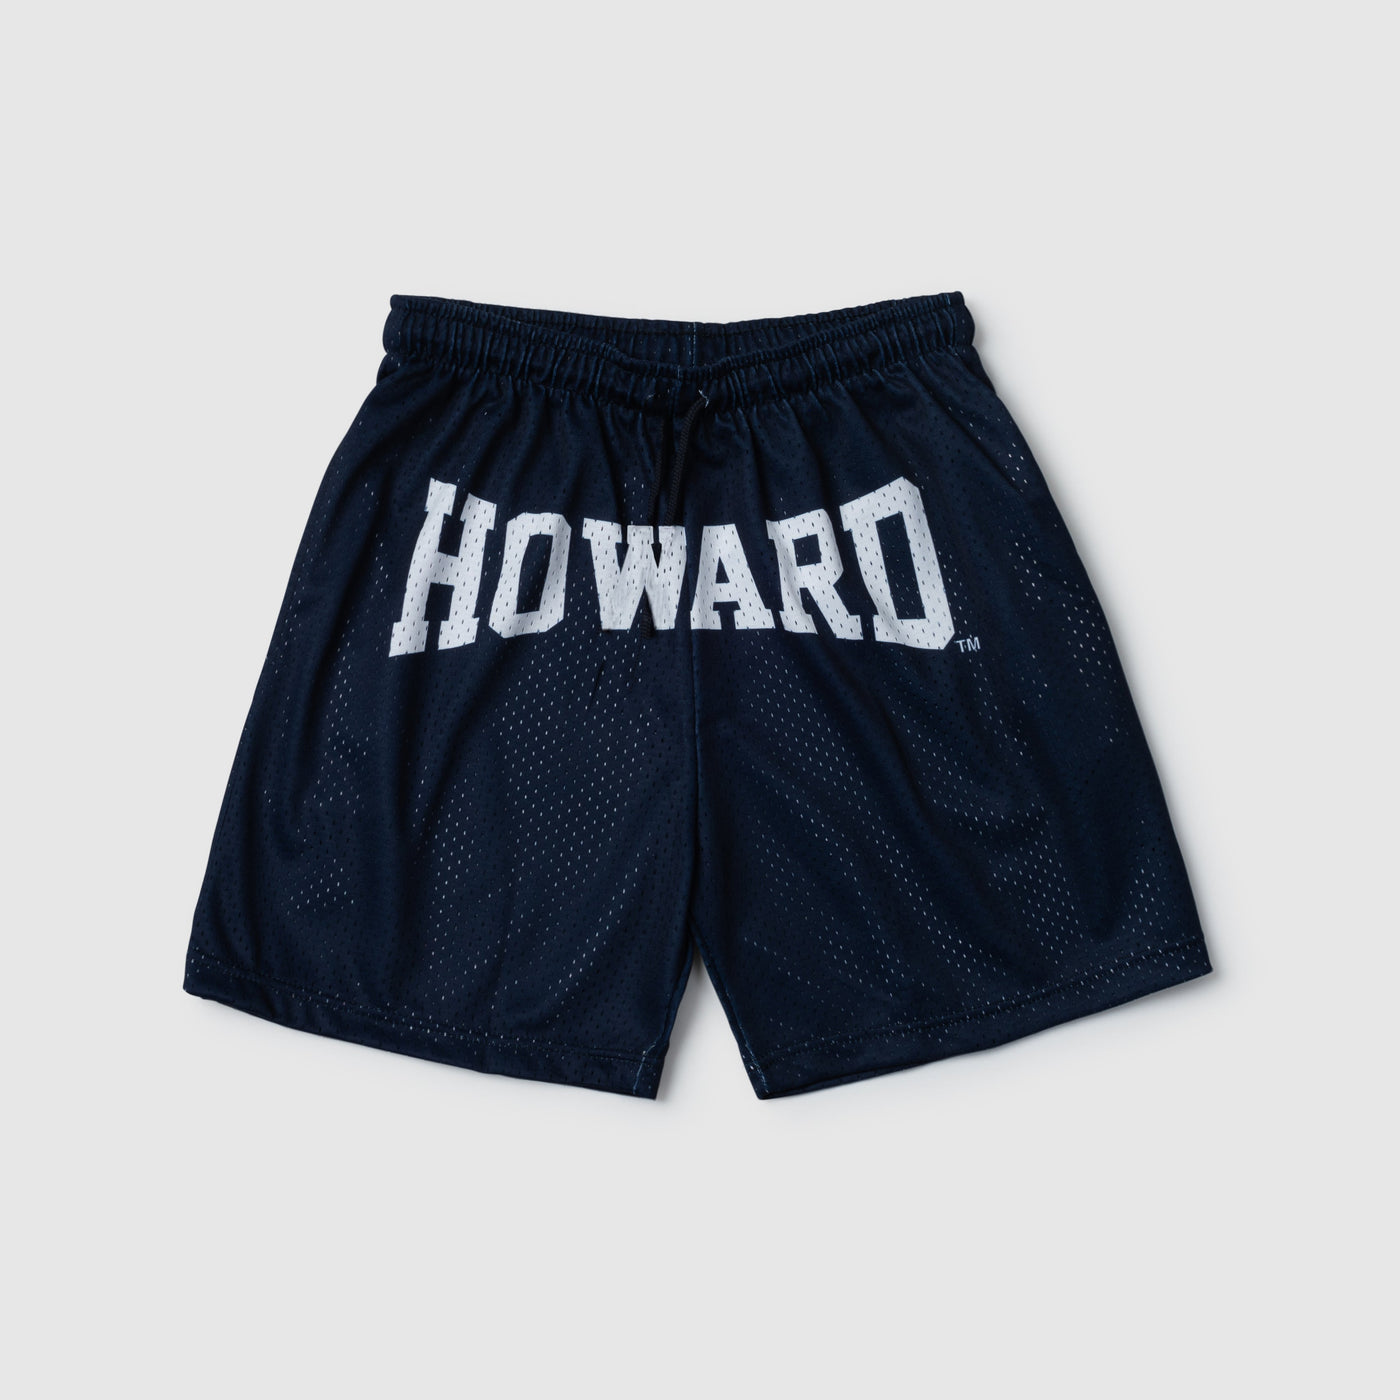 Howard Vintage Mesh Shorts (Navy)